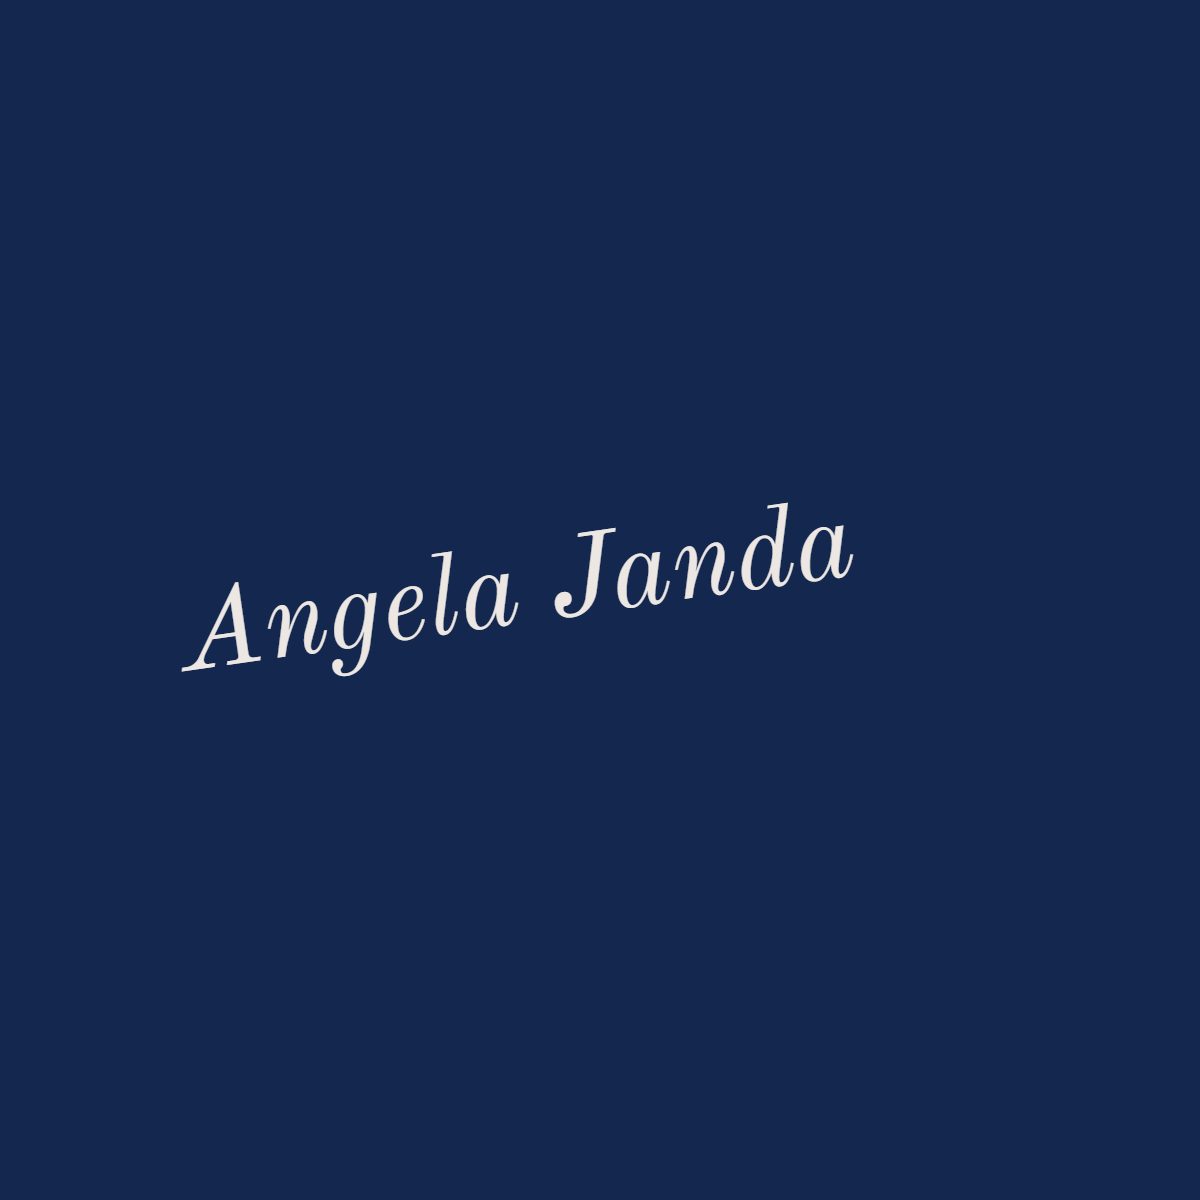 logo that reads "Angela Janda" in very light pink type on a dark blue background